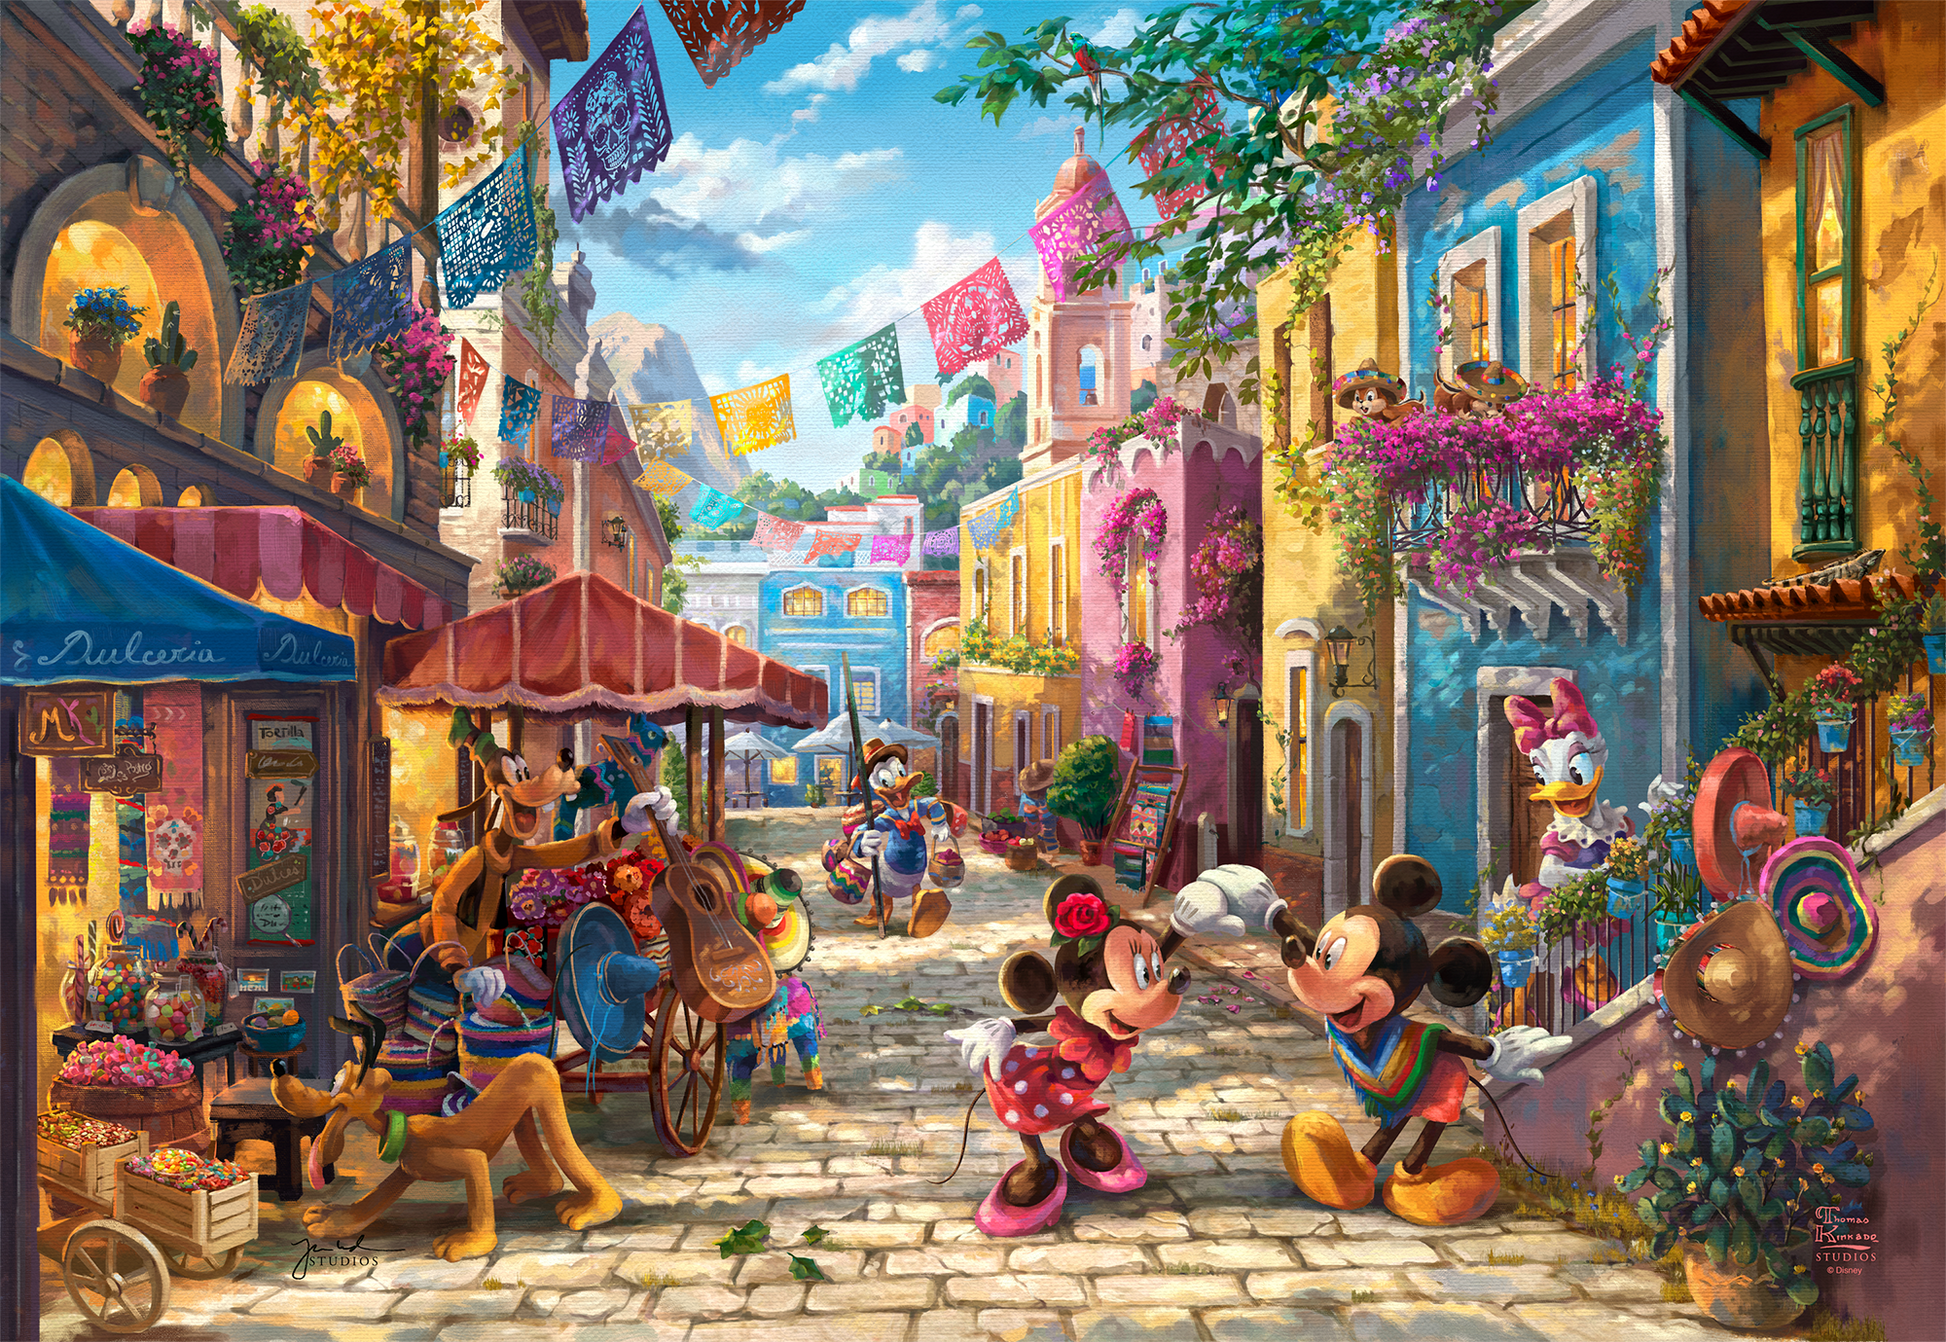 NEW* Thomas Kinkade-Disney: Mickey and Minnie in Mexico 6000 Piece